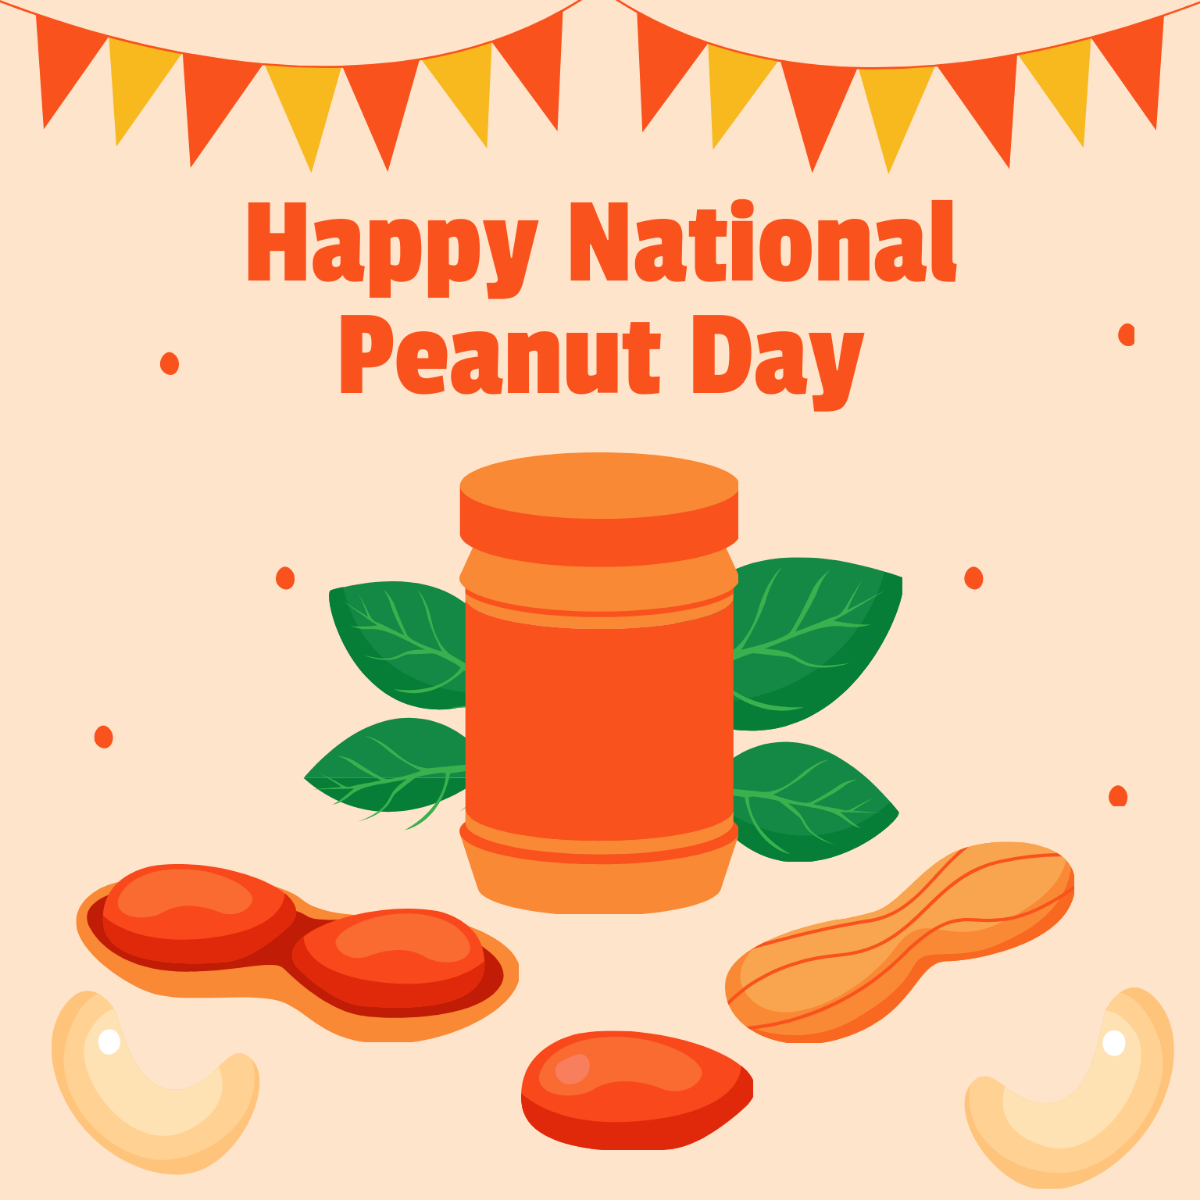 Happy National Peanut Day Illustration